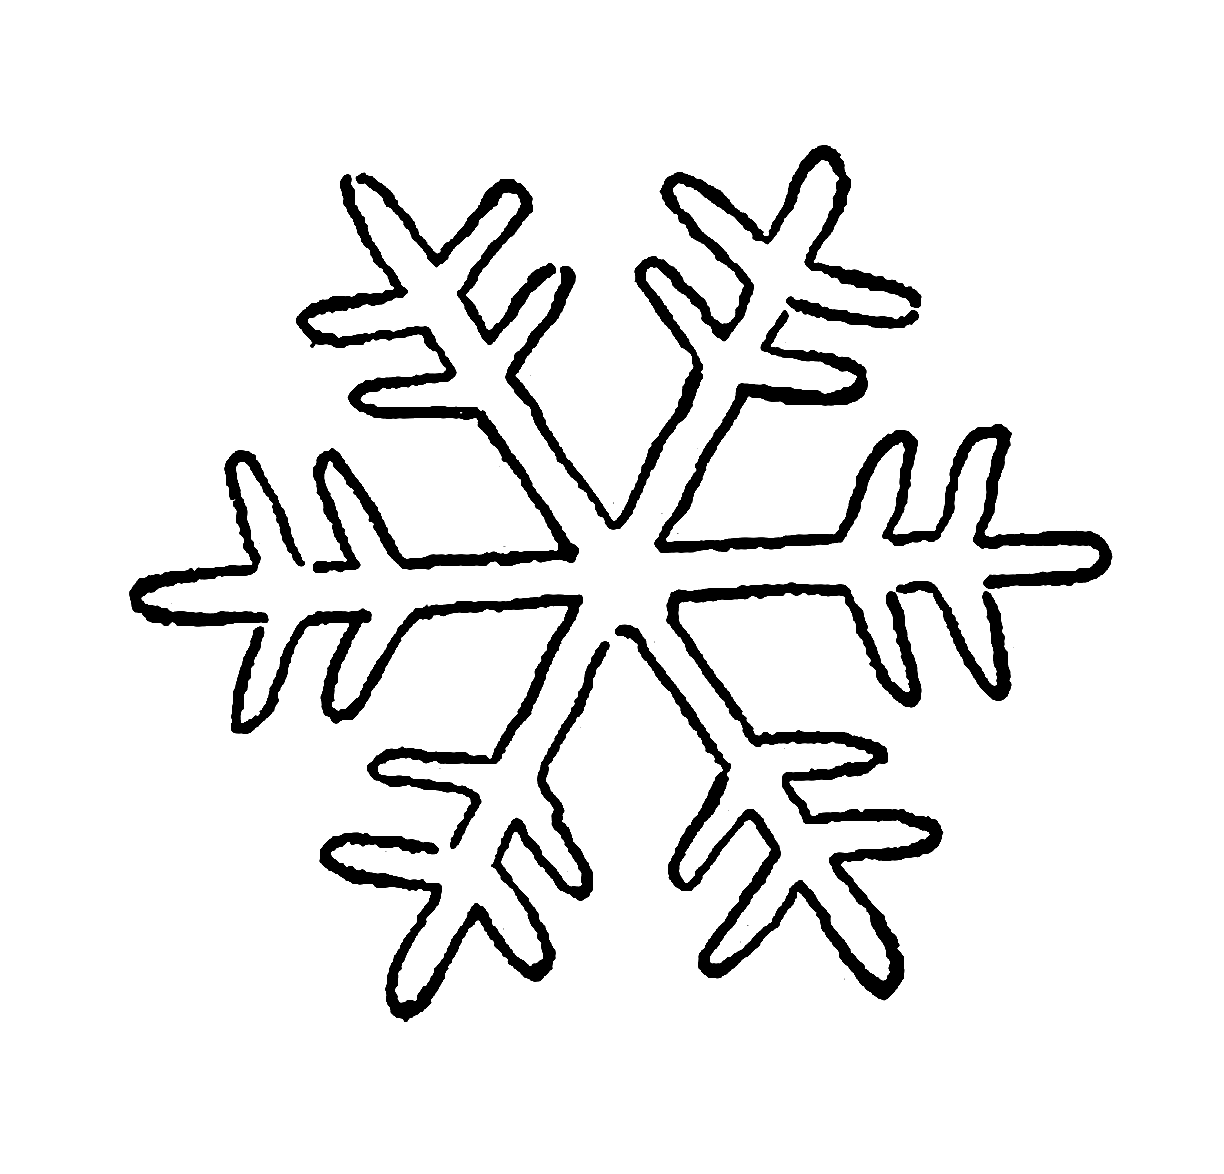 Digital stamp design stock. Clipart snowflake illustration